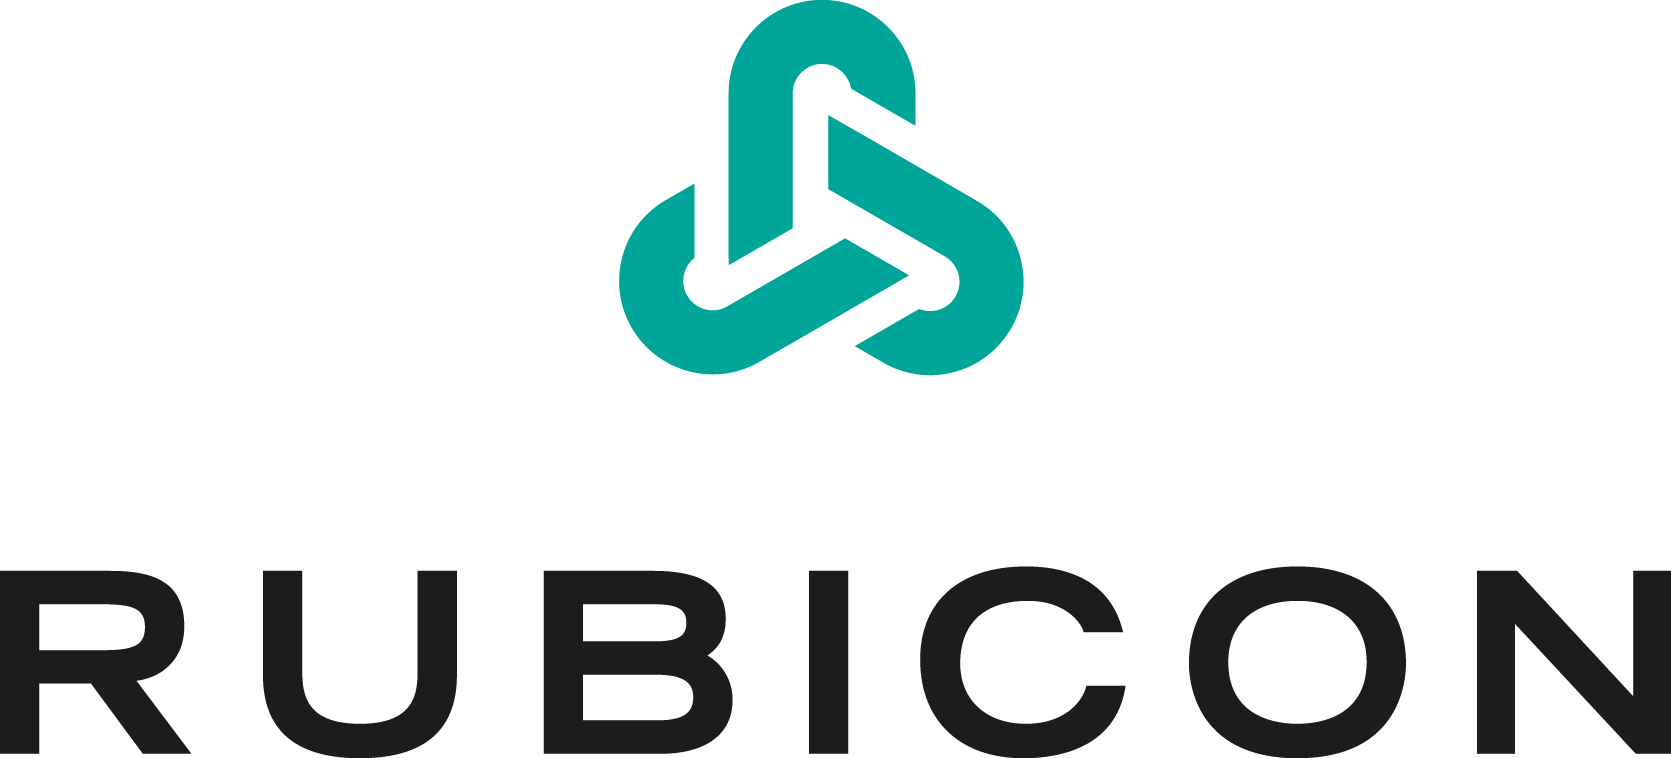 rubicon-logo-logodix